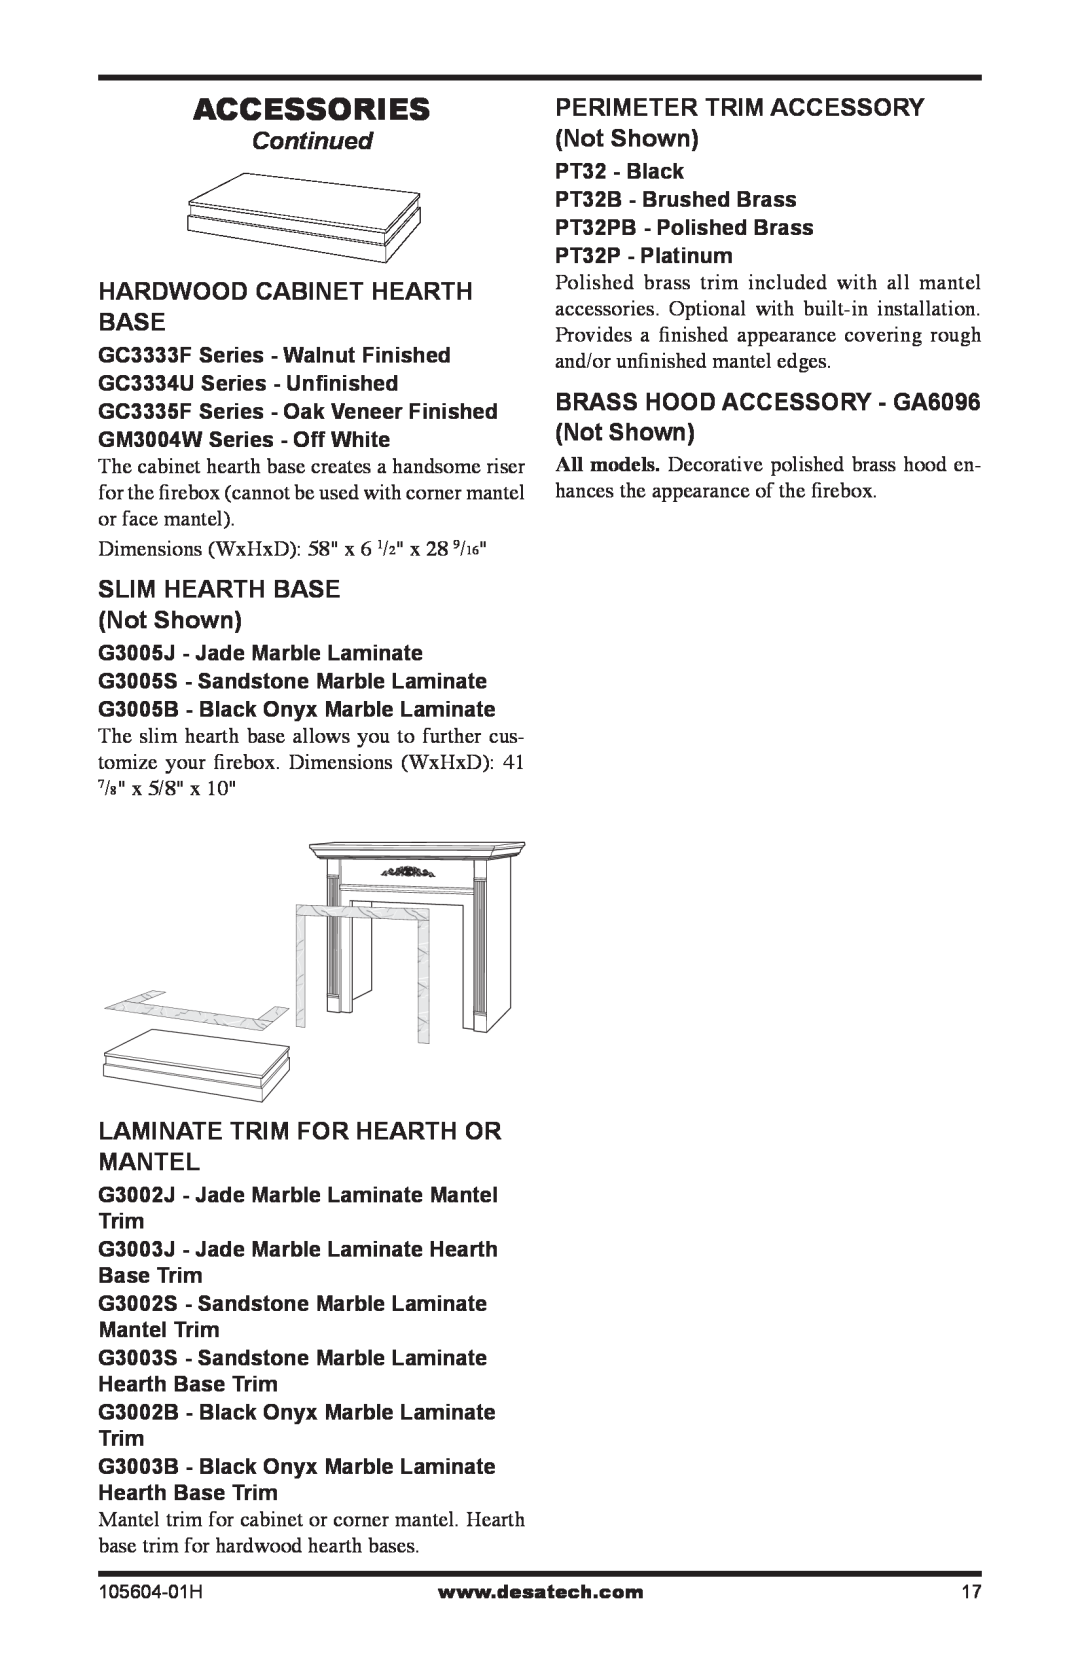 Vanguard Heating FB32NCA, FB32CA, NLFB32C, NLFB32NC Continued, Hardwood Cabinet Hearth Base, SLIM HEARTH BASE Not Shown 